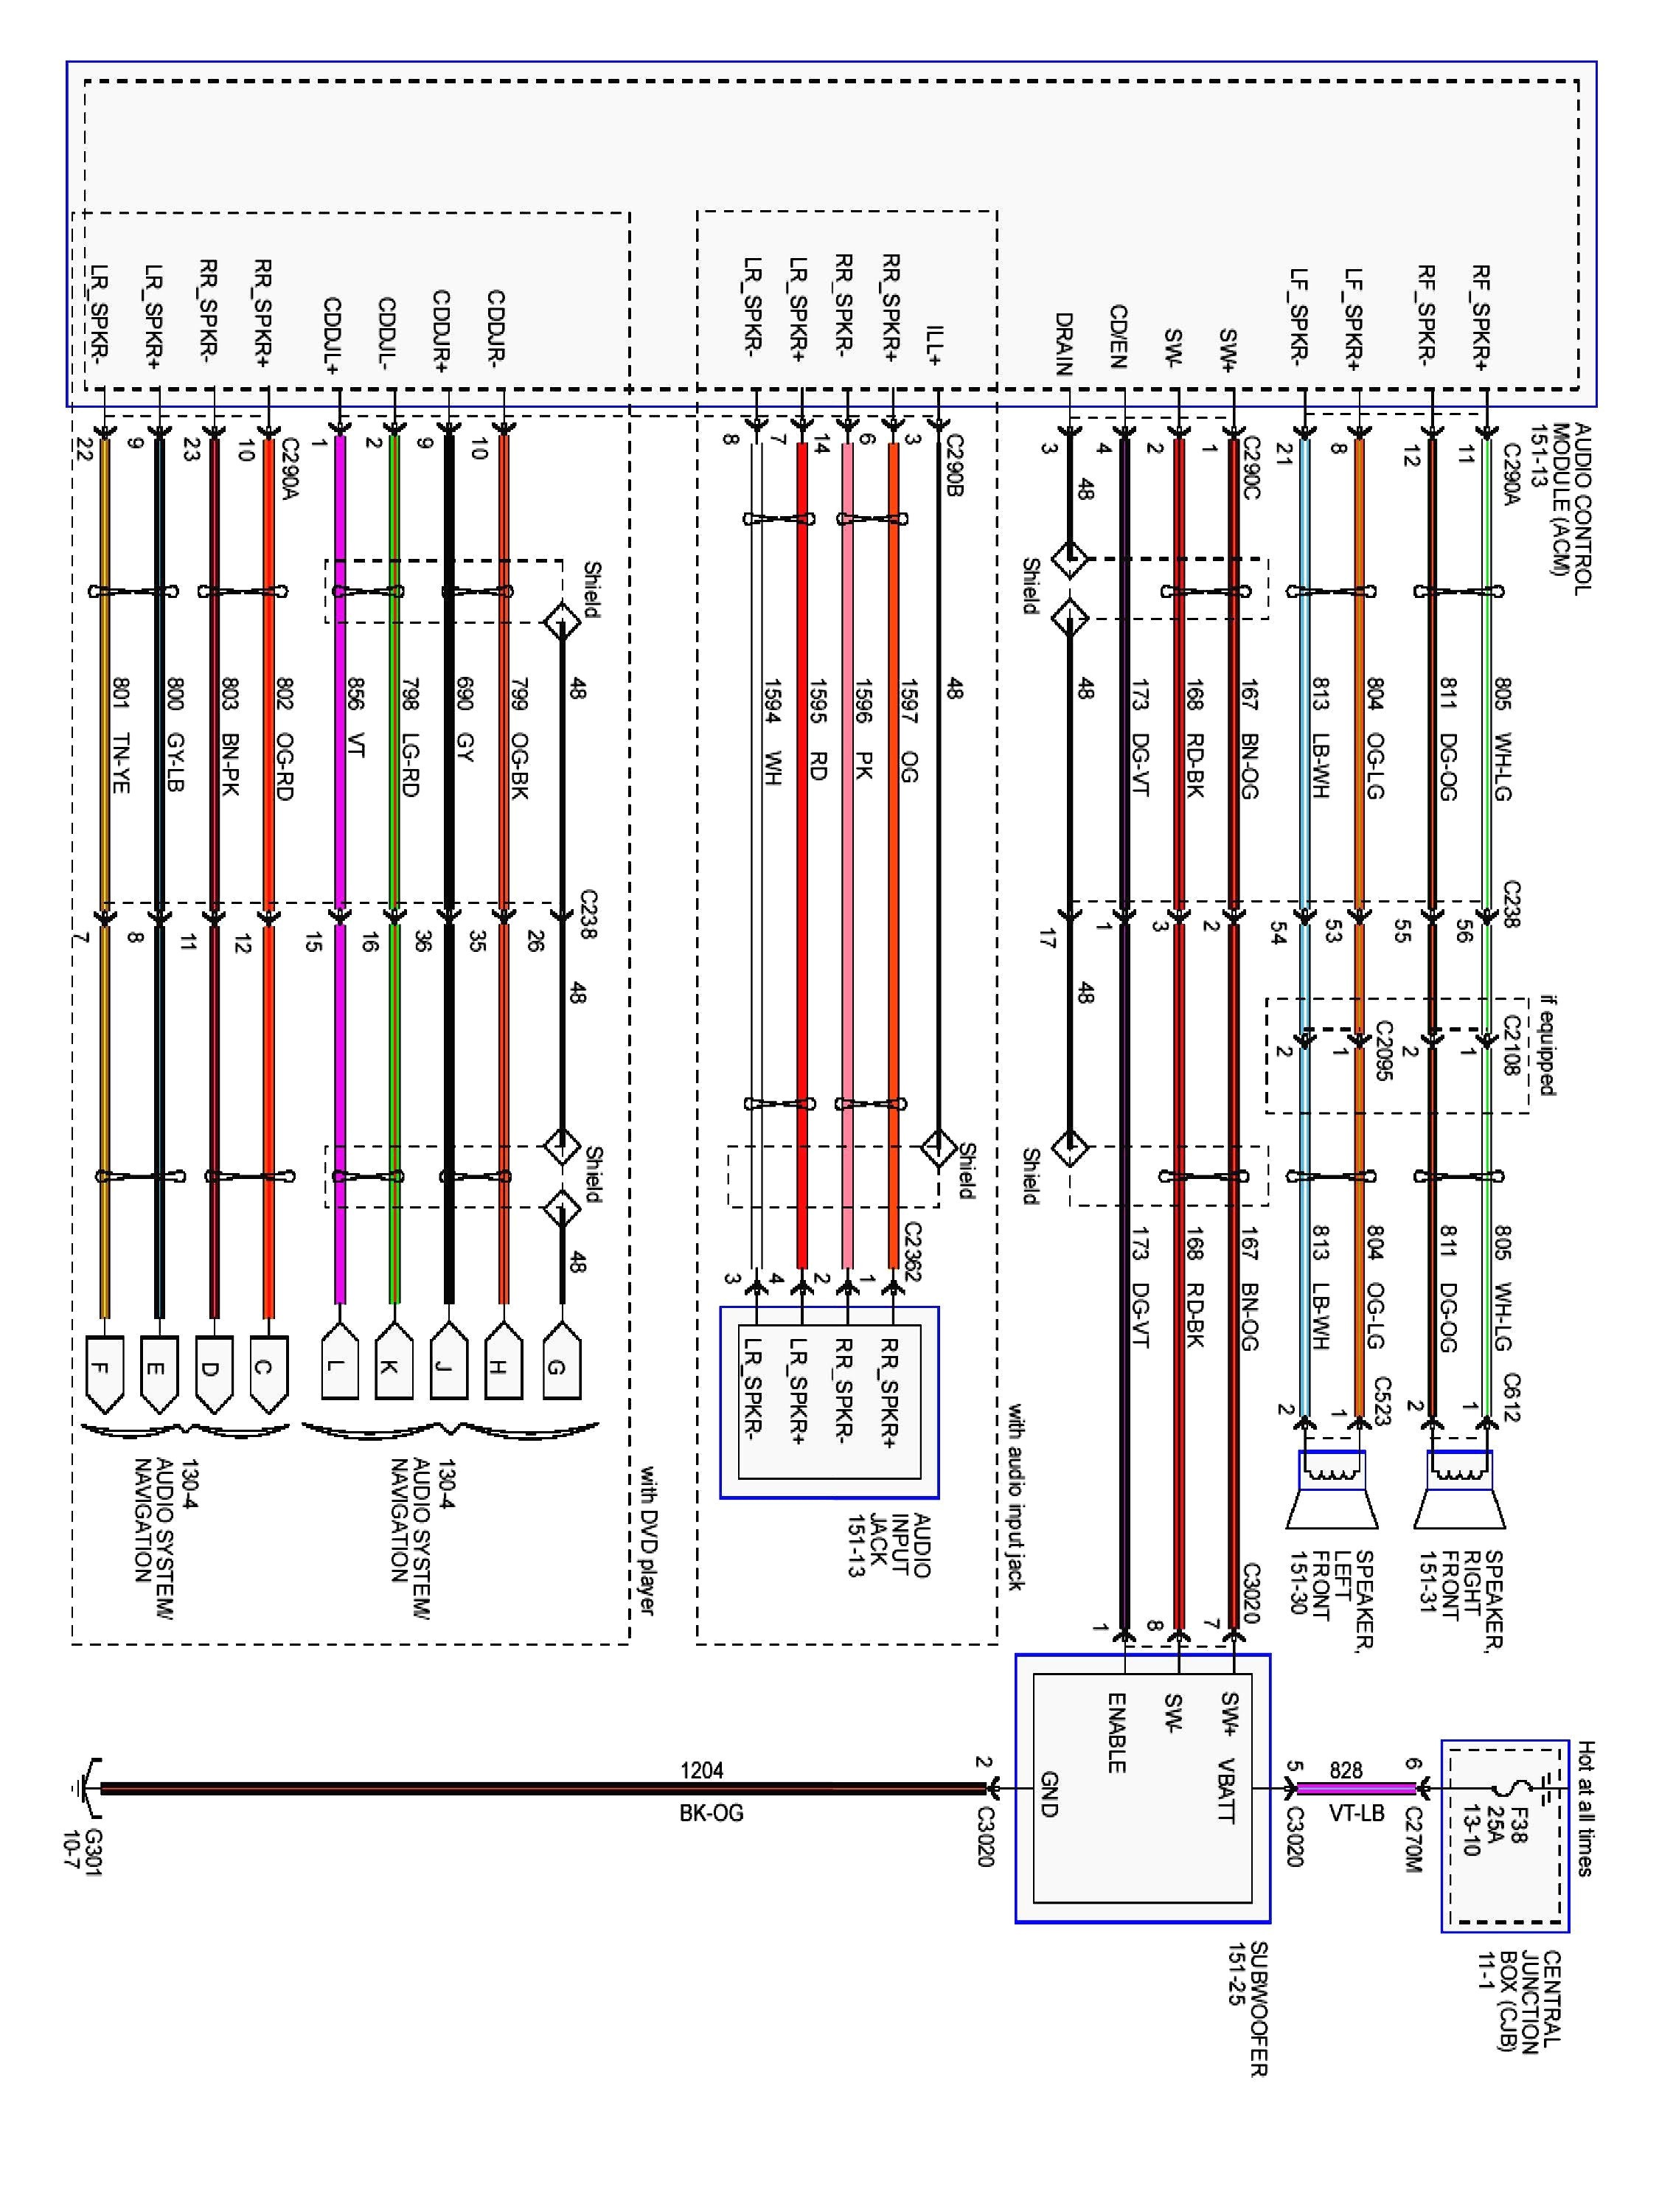 Ford 4 0 sohc Engine Diagram 2 5r55e Transmission Wiring Diagram Worksheet and Wiring Diagram • Of Ford 4 0 sohc Engine Diagram 2